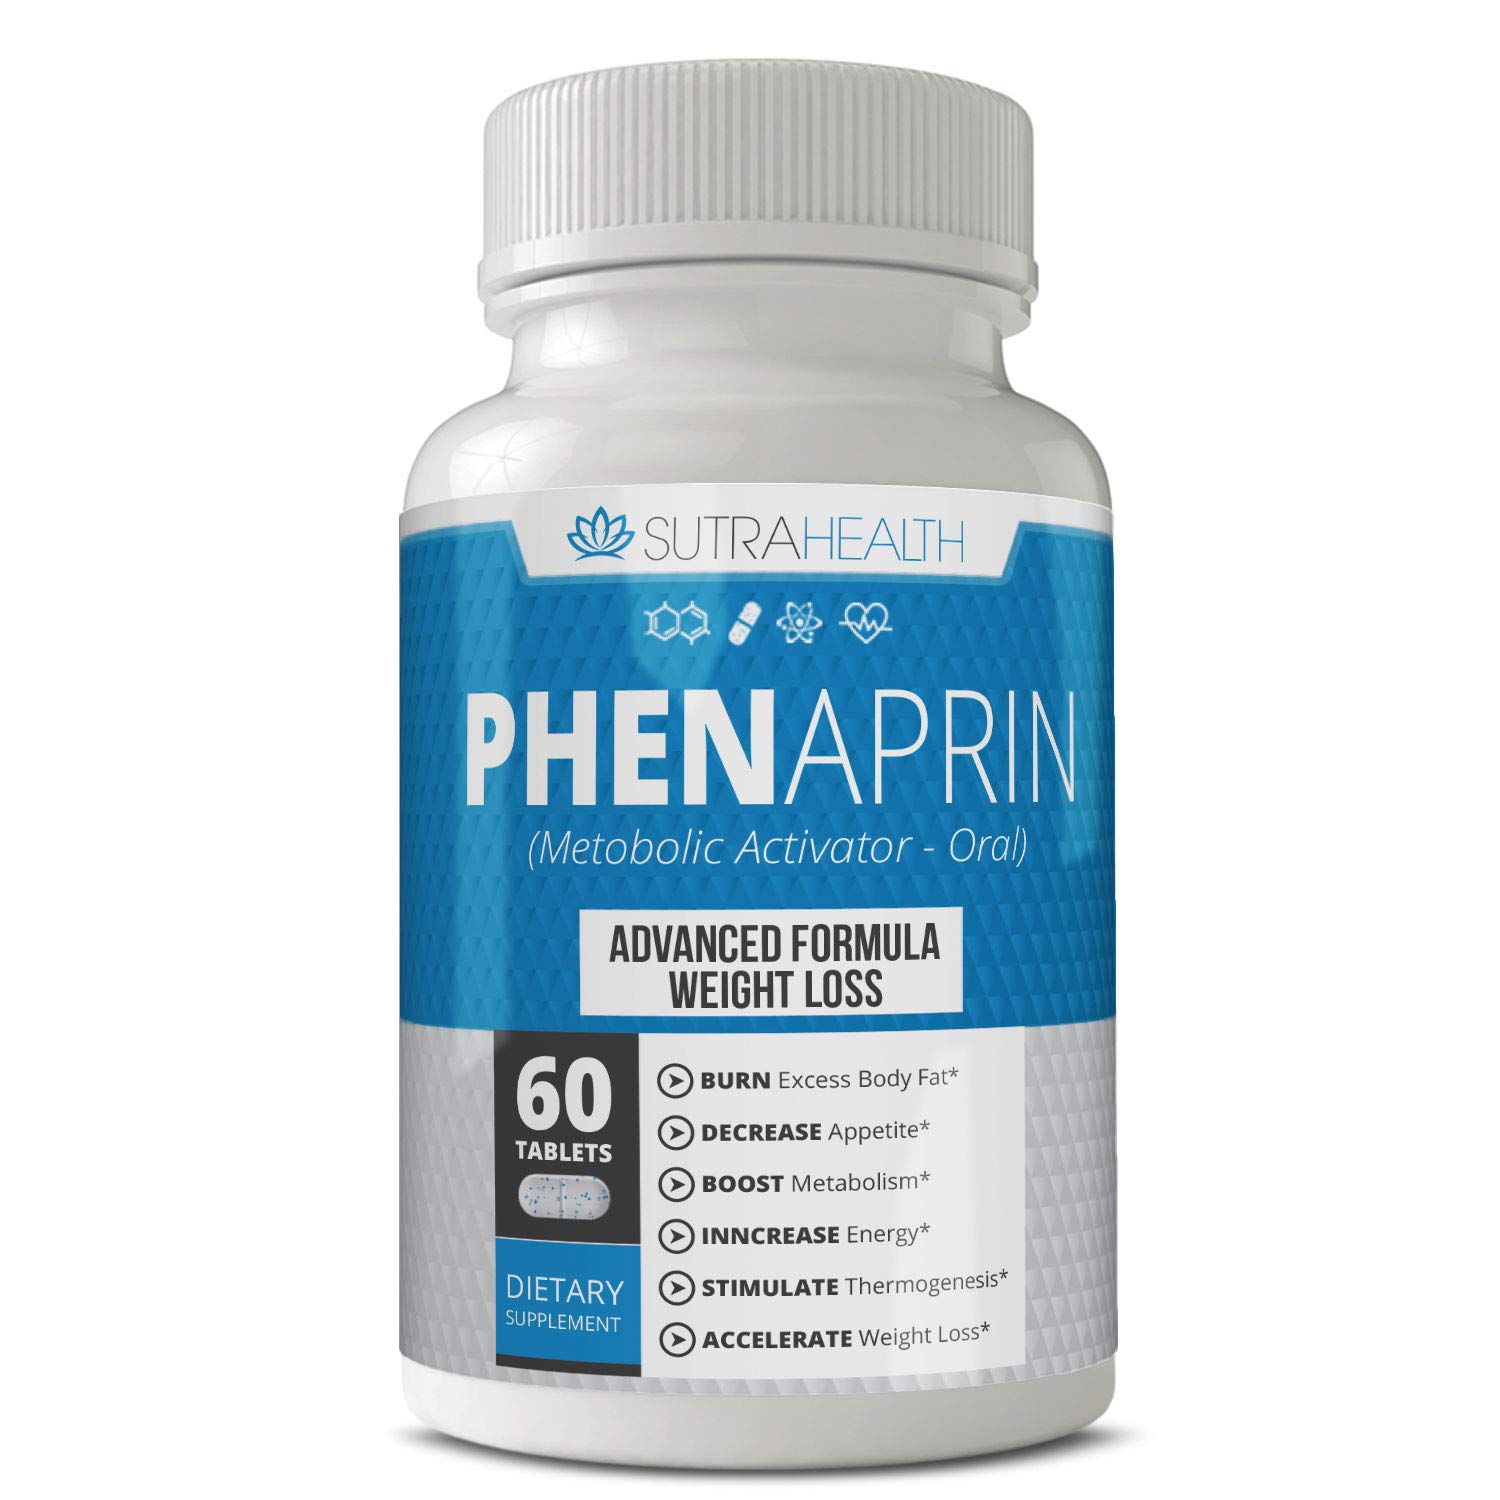 PhenAprin pills